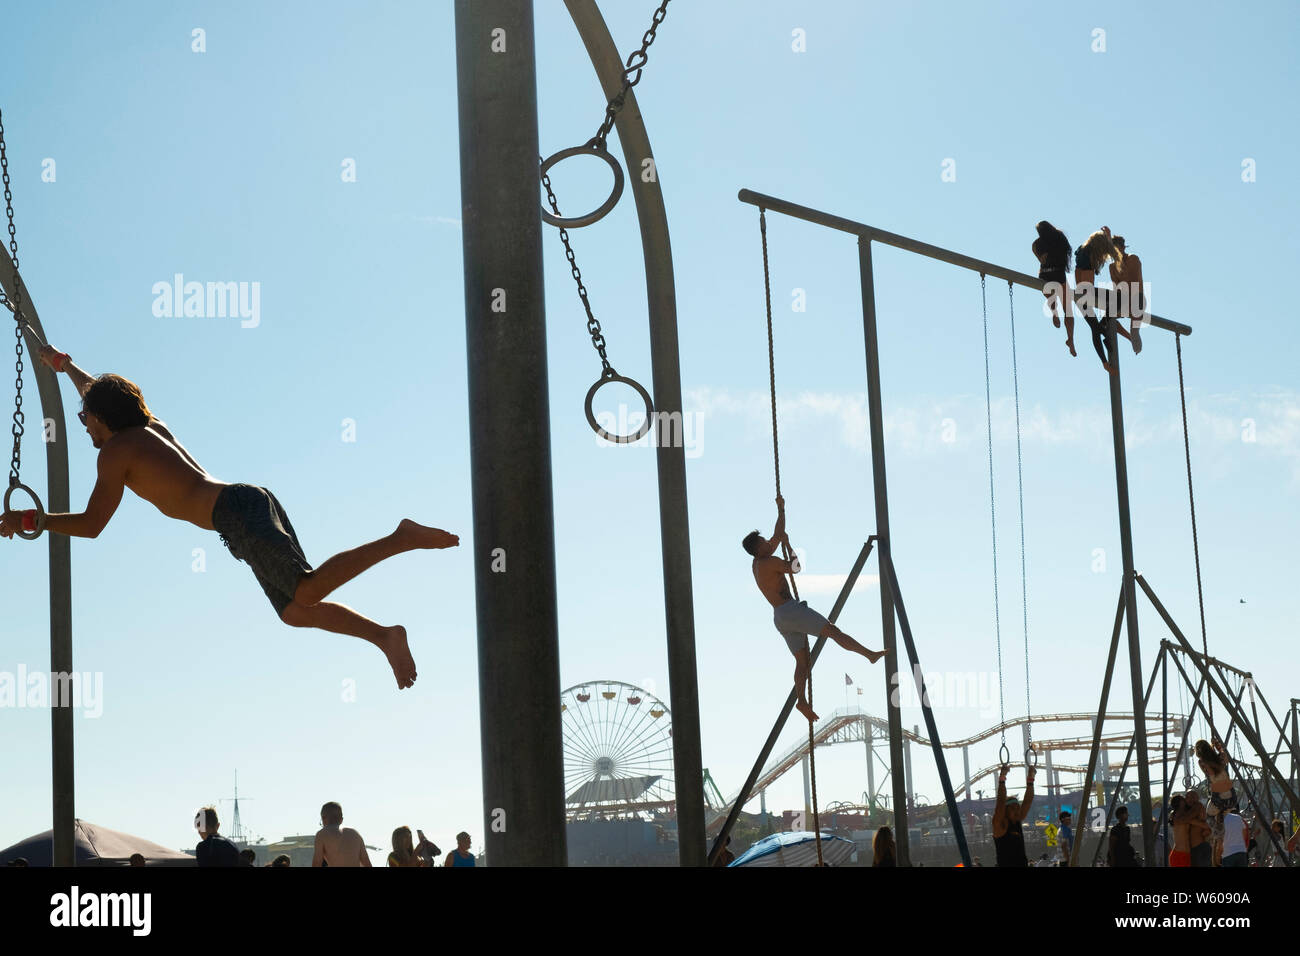 Gymnastics on the beach, Santa Monica, Los Angeles County, California, United States of America Stock Photo